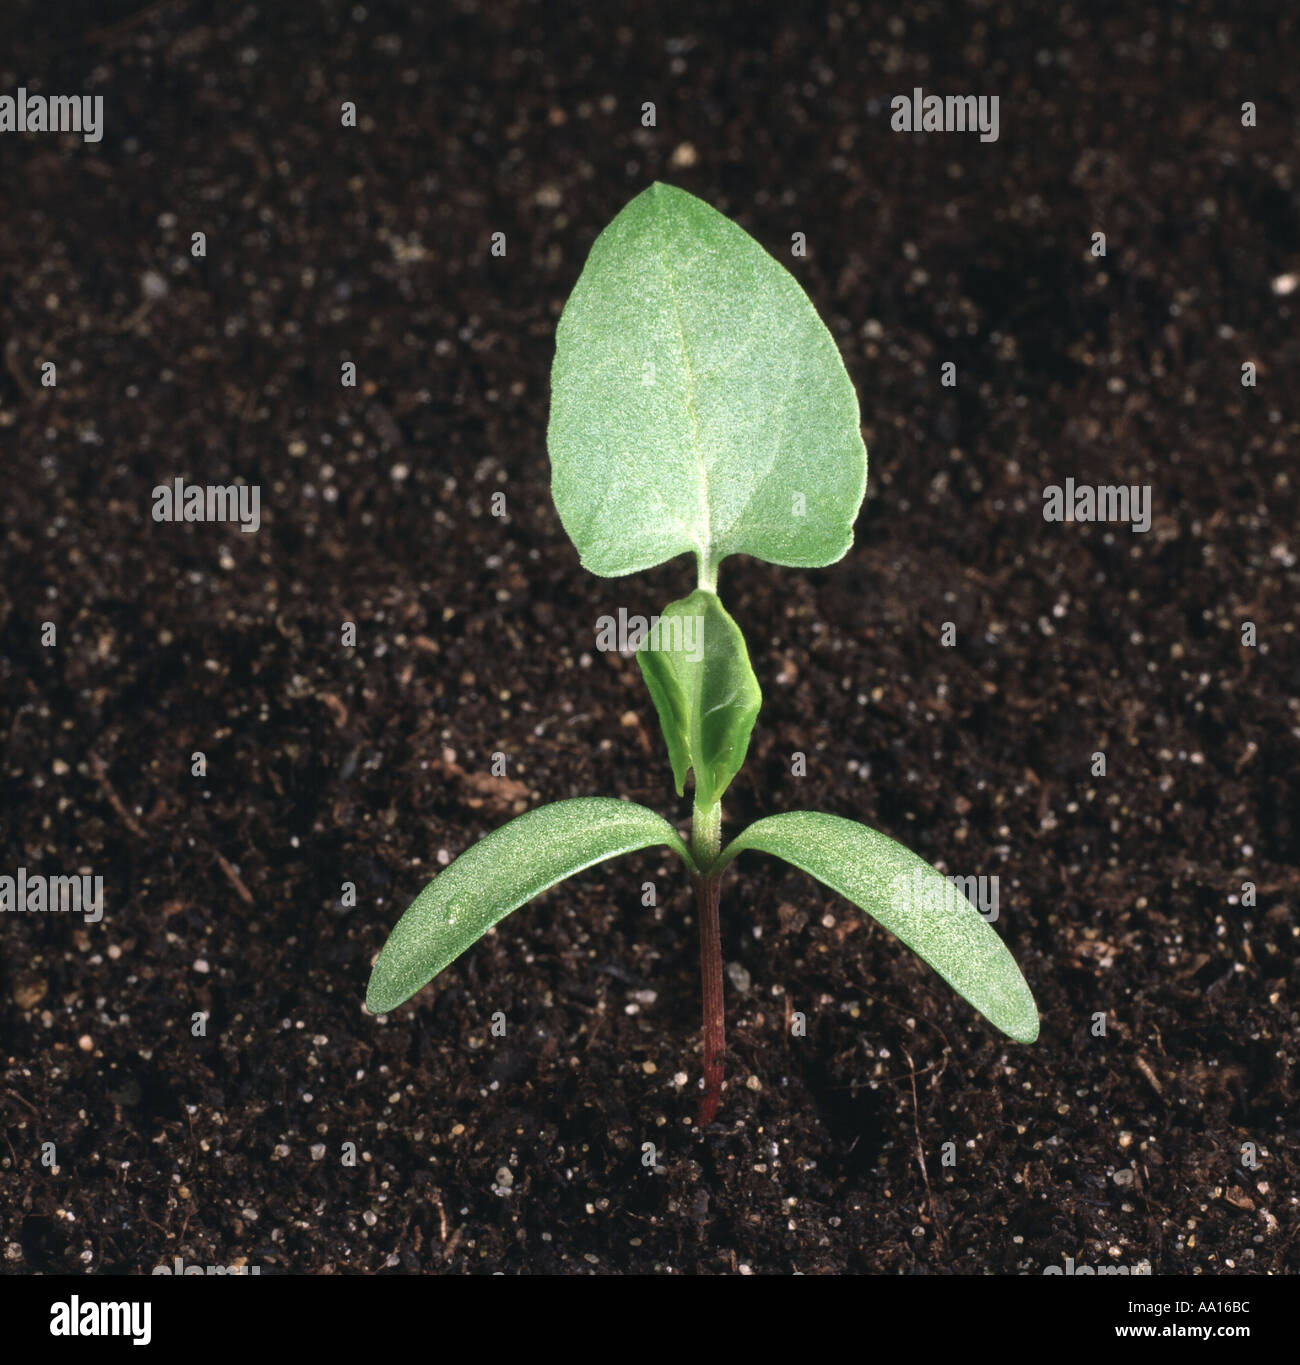 Black bindweed seedling with cotyledons and one true leaf Bilderdykia convolulus Stock Photo